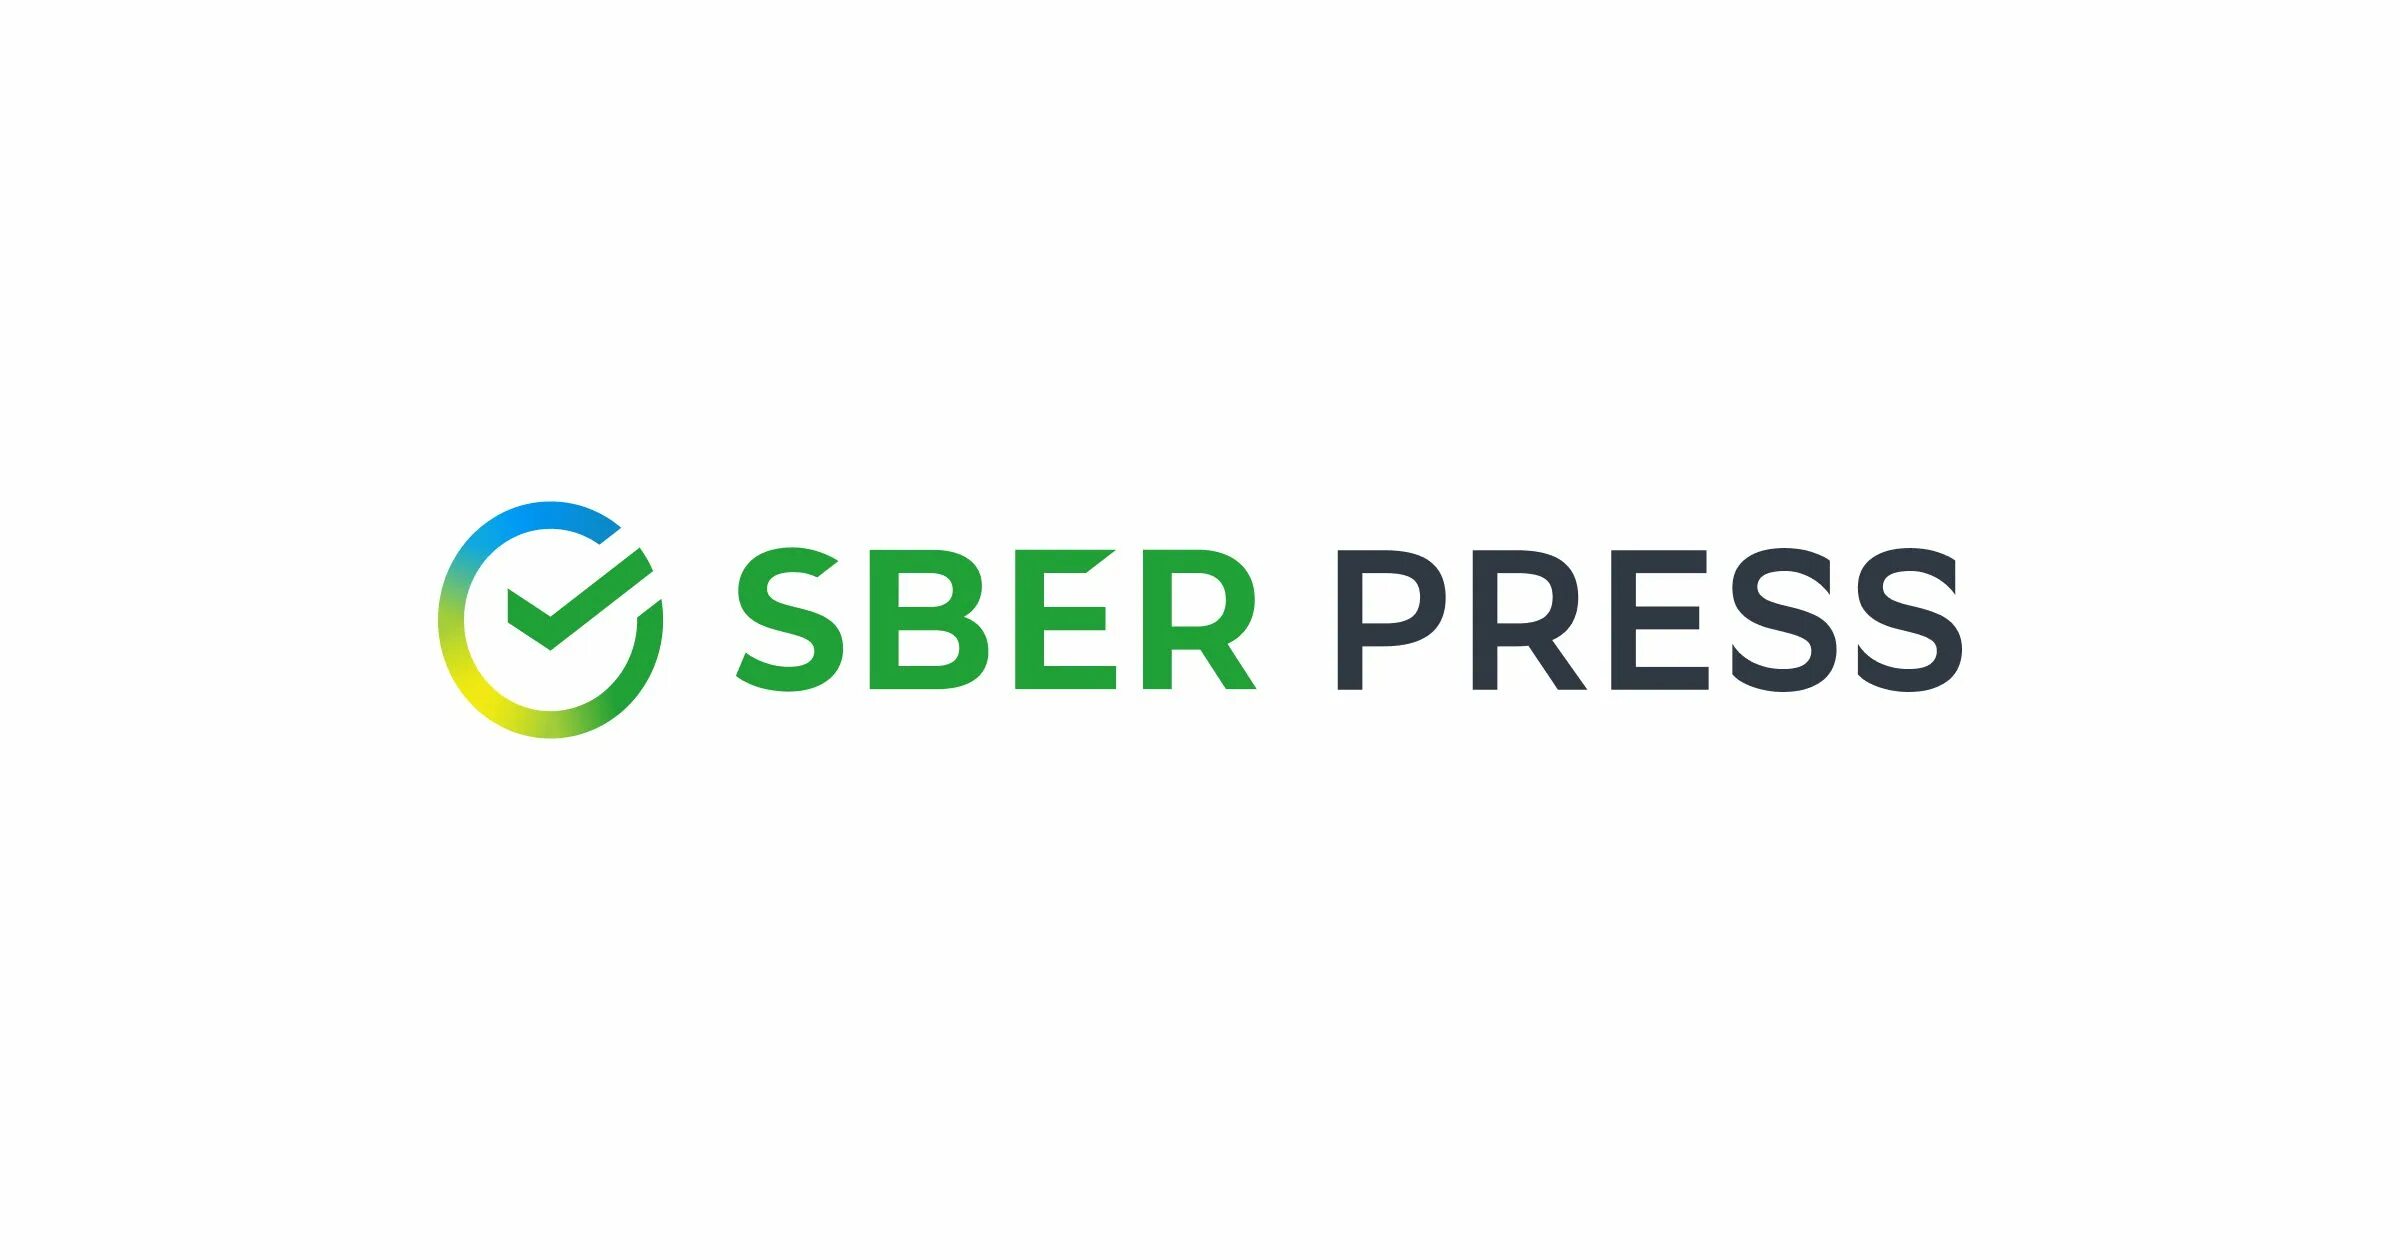 Https sber ru. Sber логотип. Sber логотип английская версия. Сбер лого 2021. Логотип Сбербанка на английском языке.